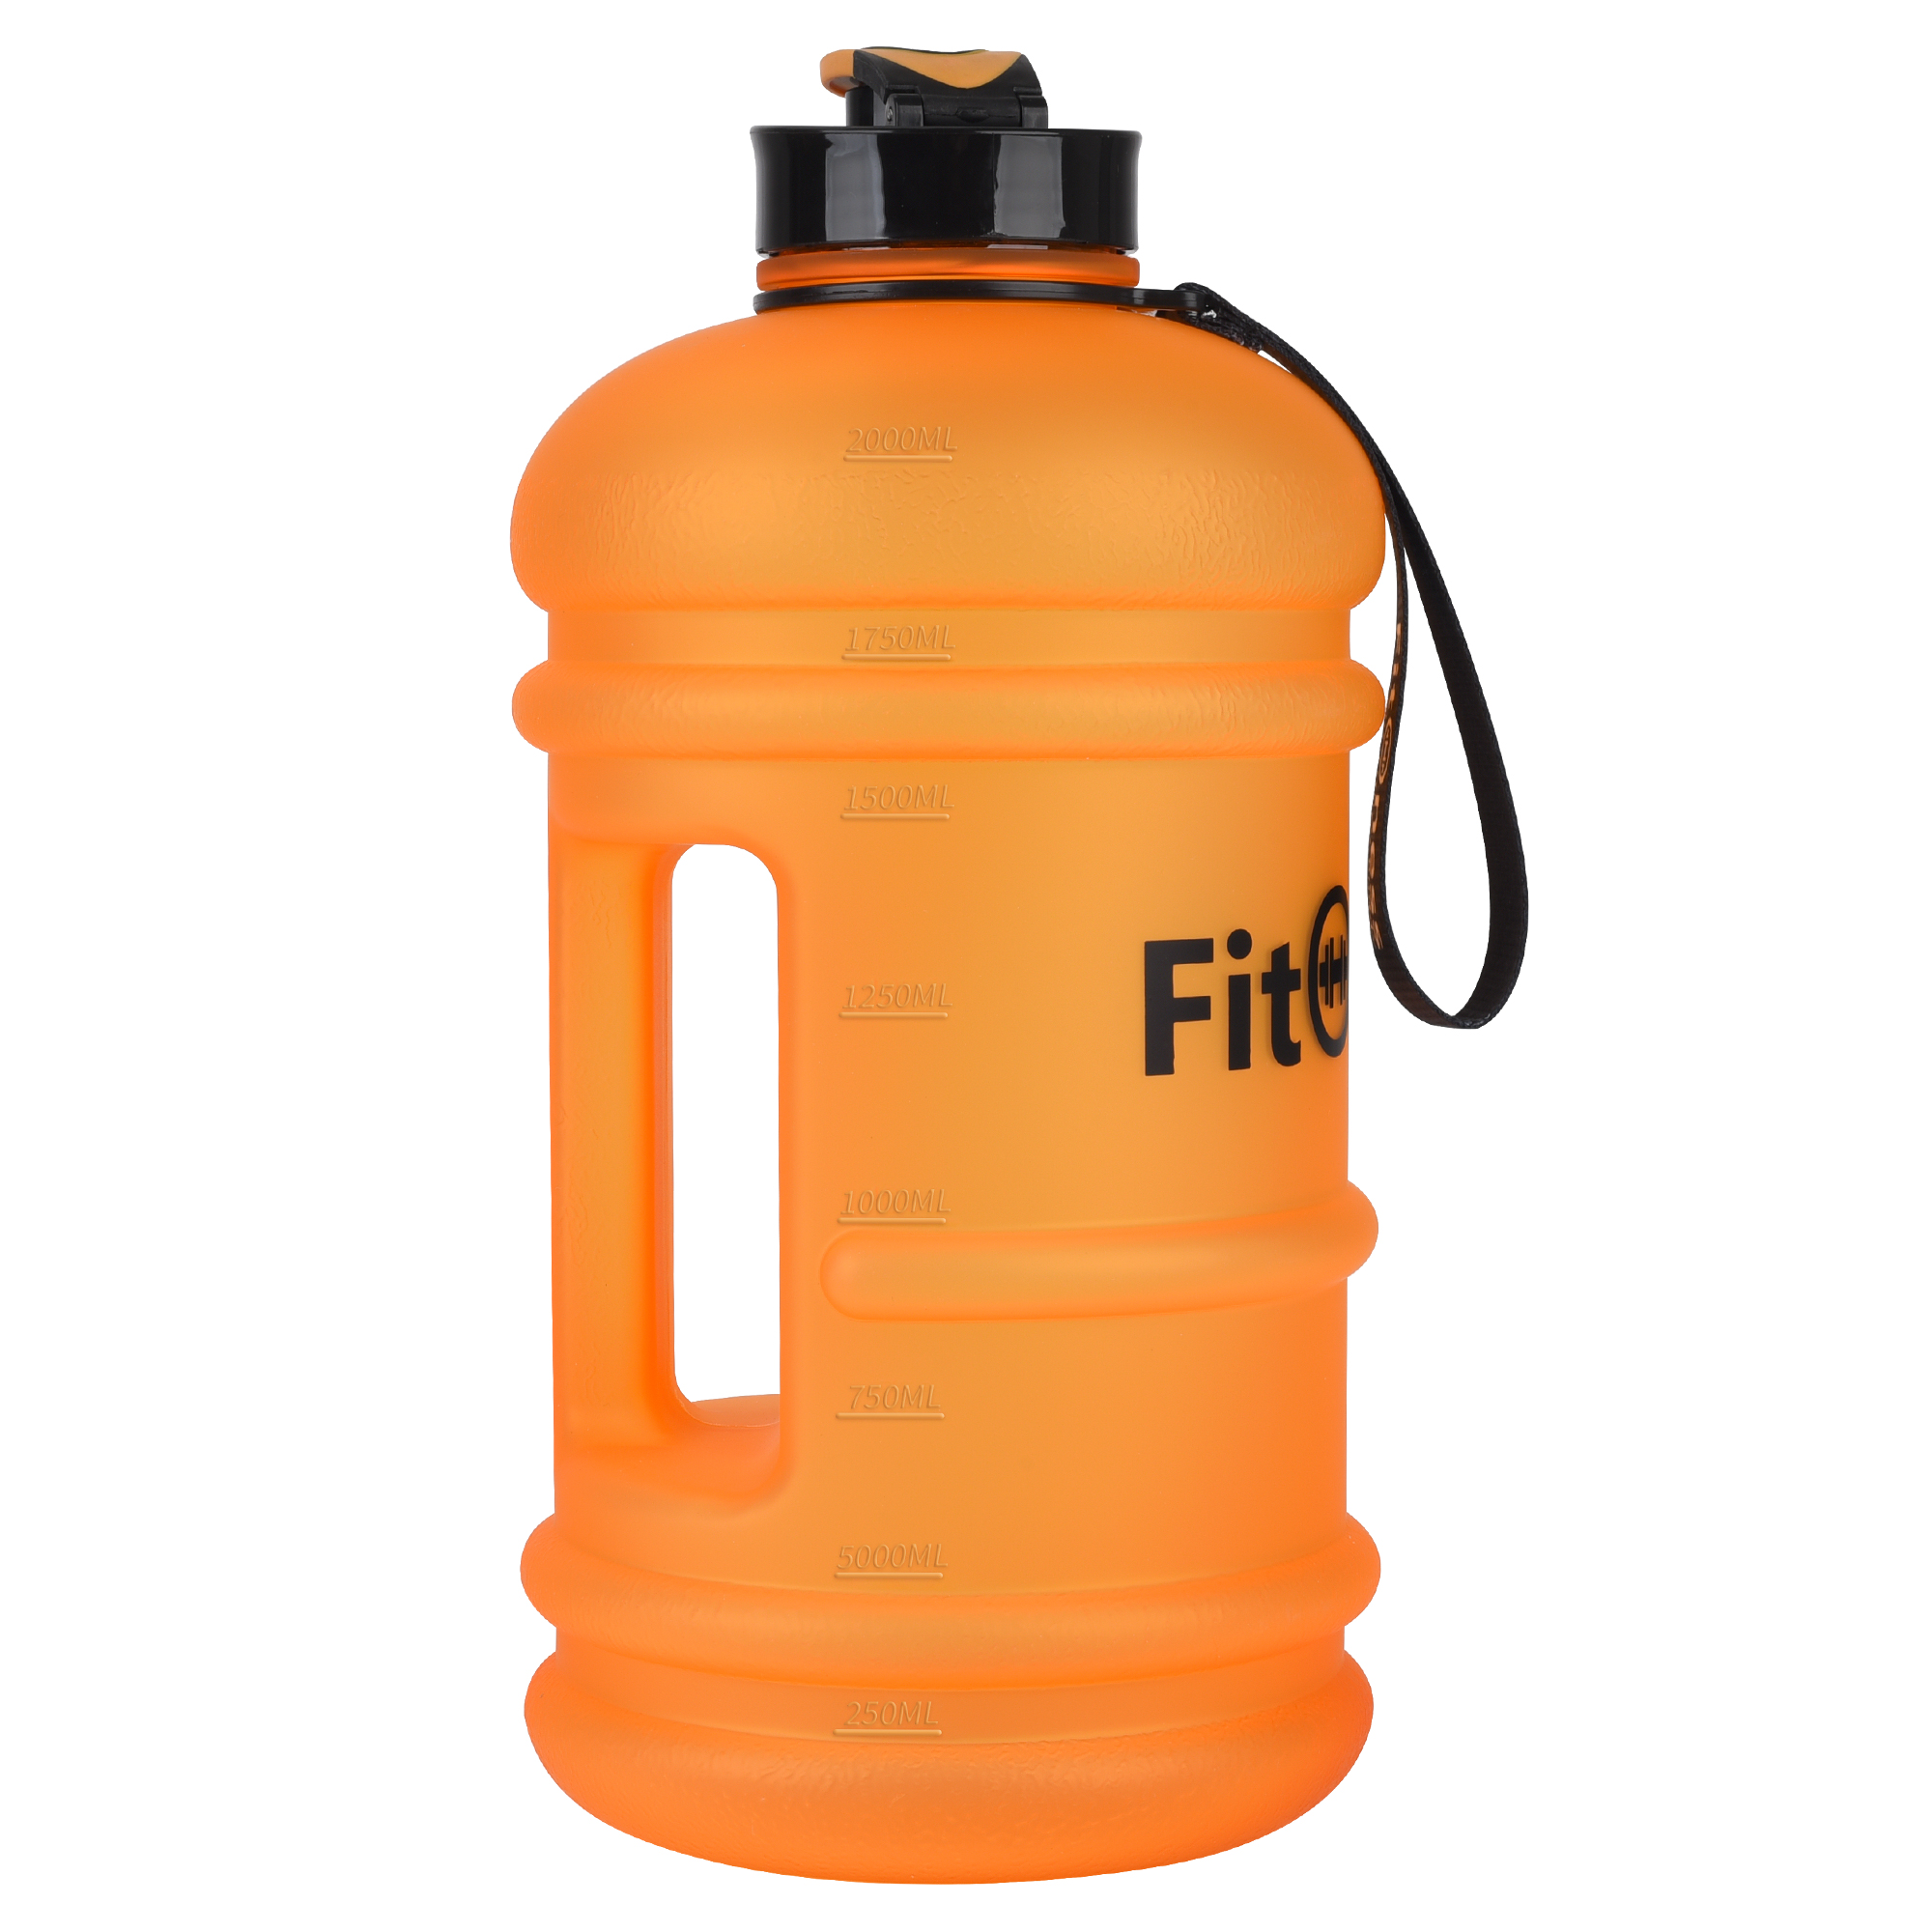 Brand Fitoness Jug Bottle 2.2l / 77oz Orange Sports